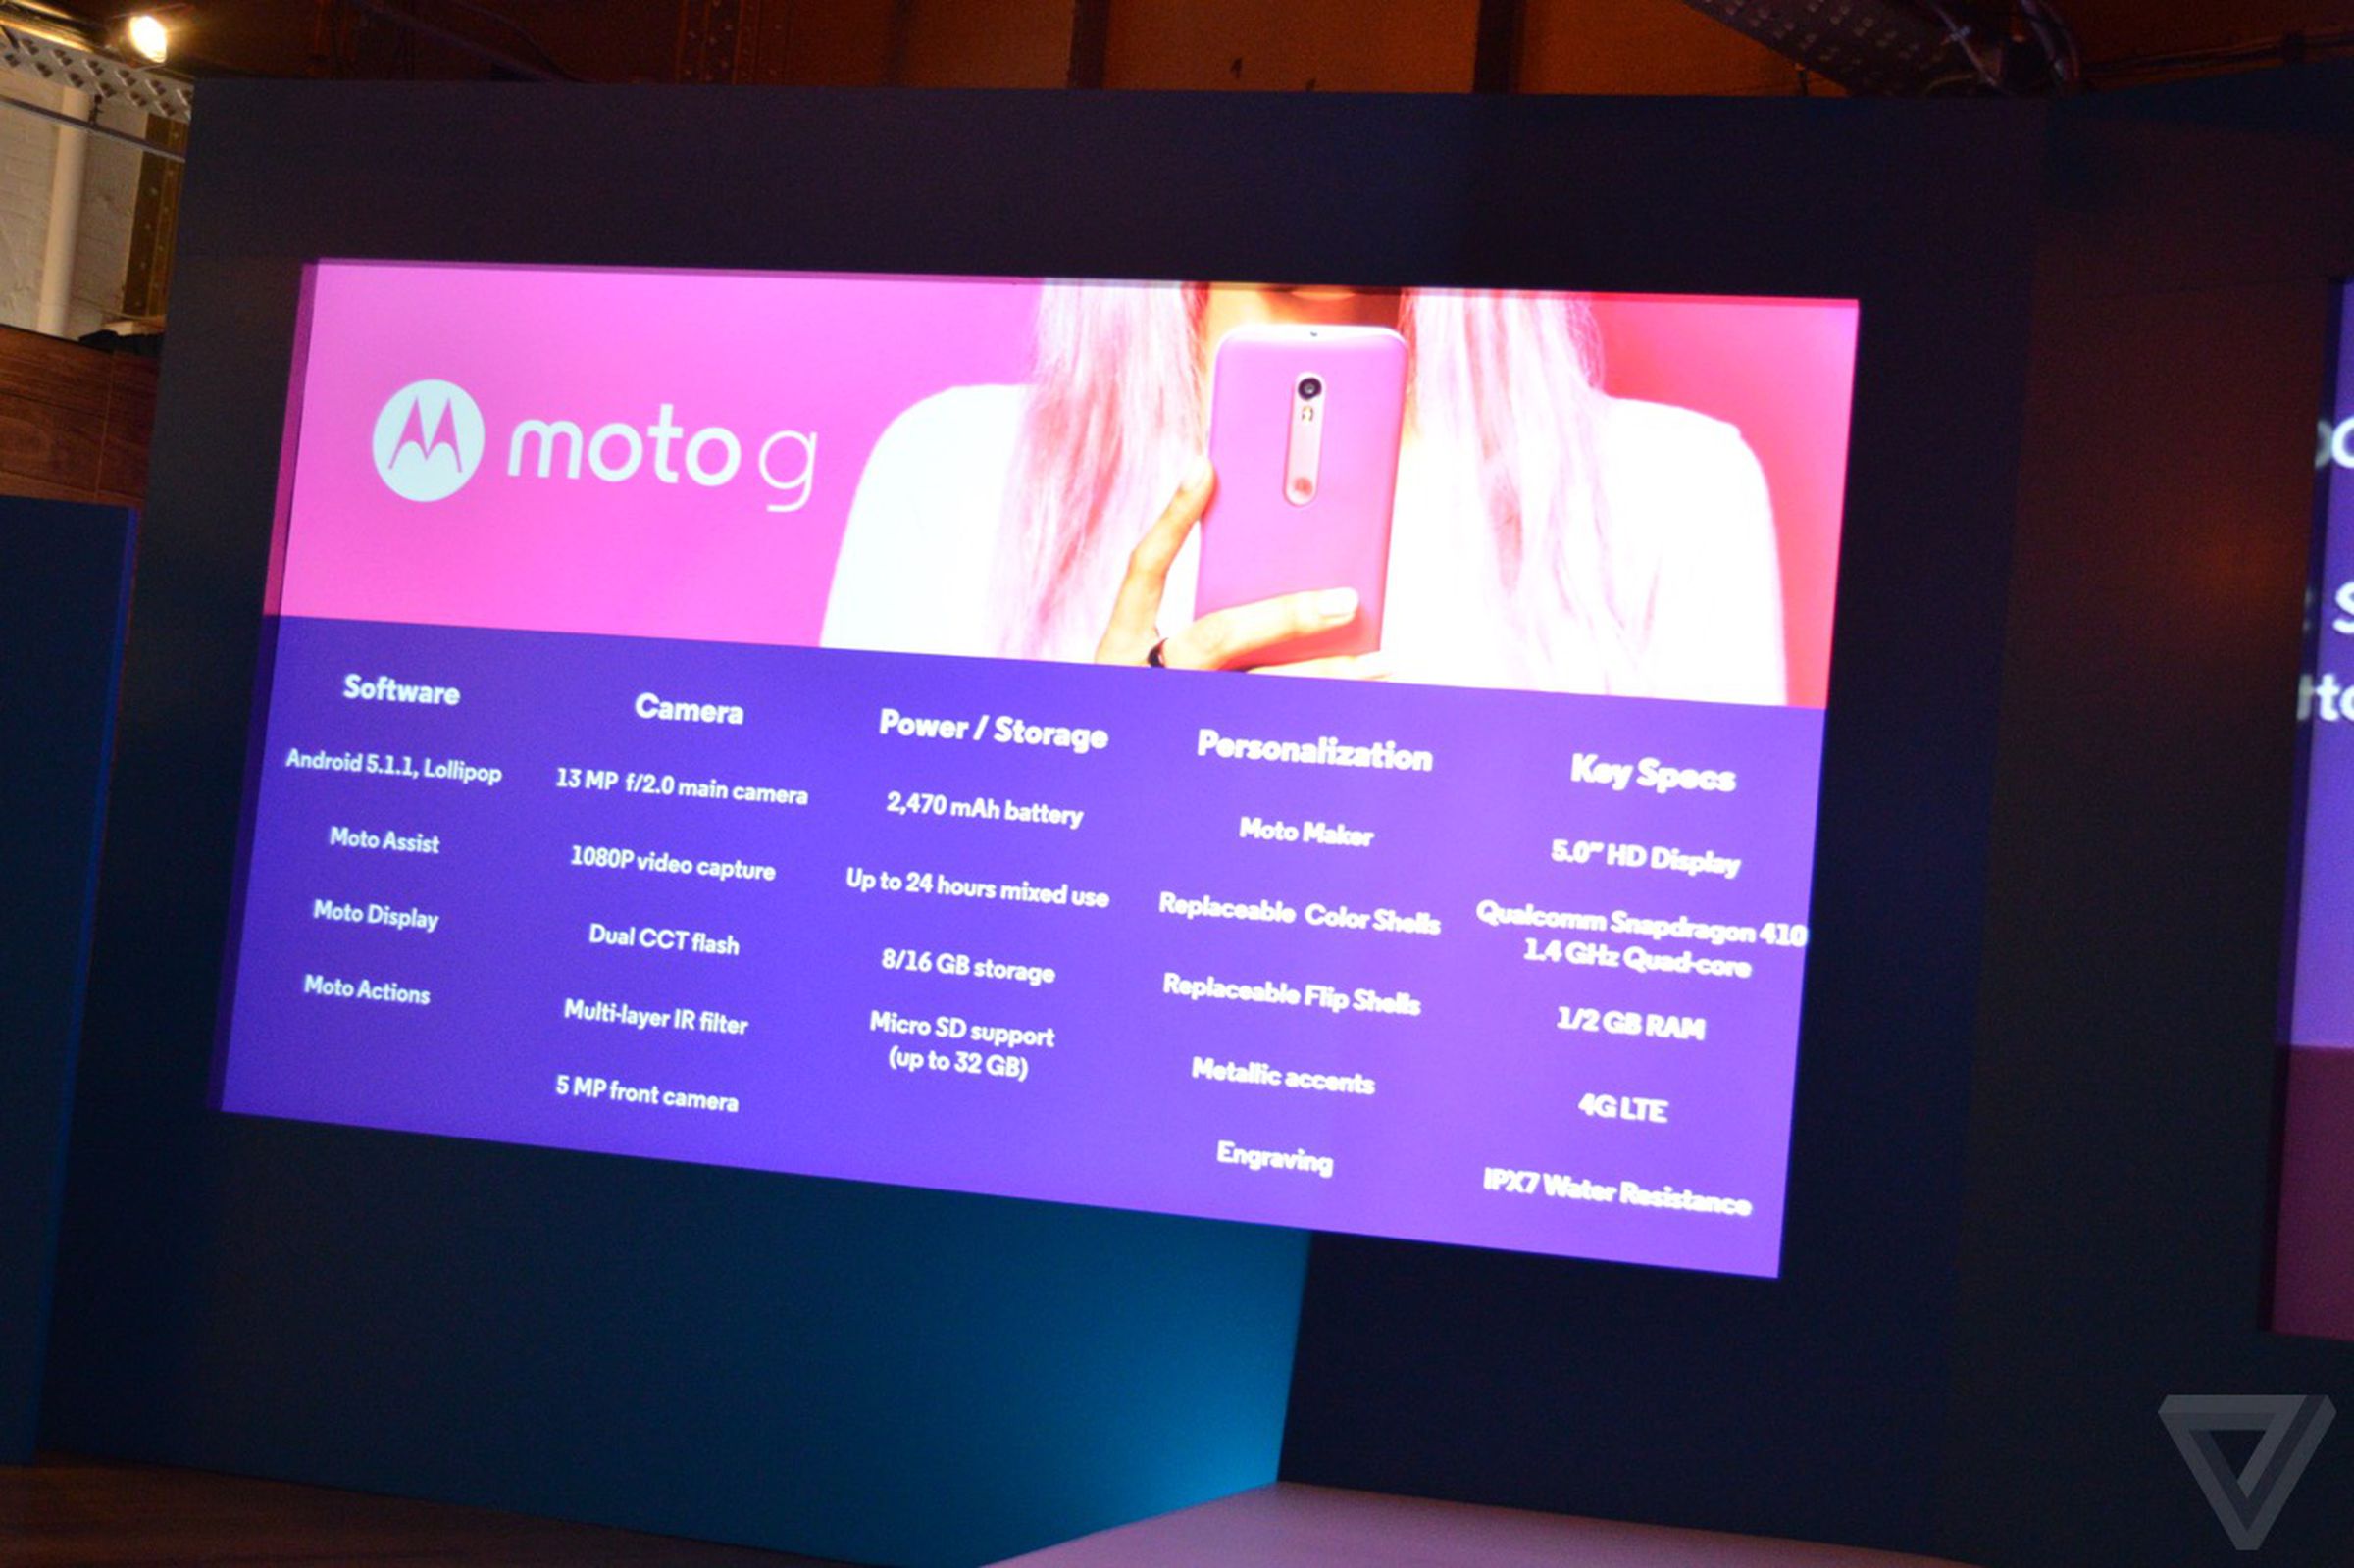 Moto G (2015) announcement photos